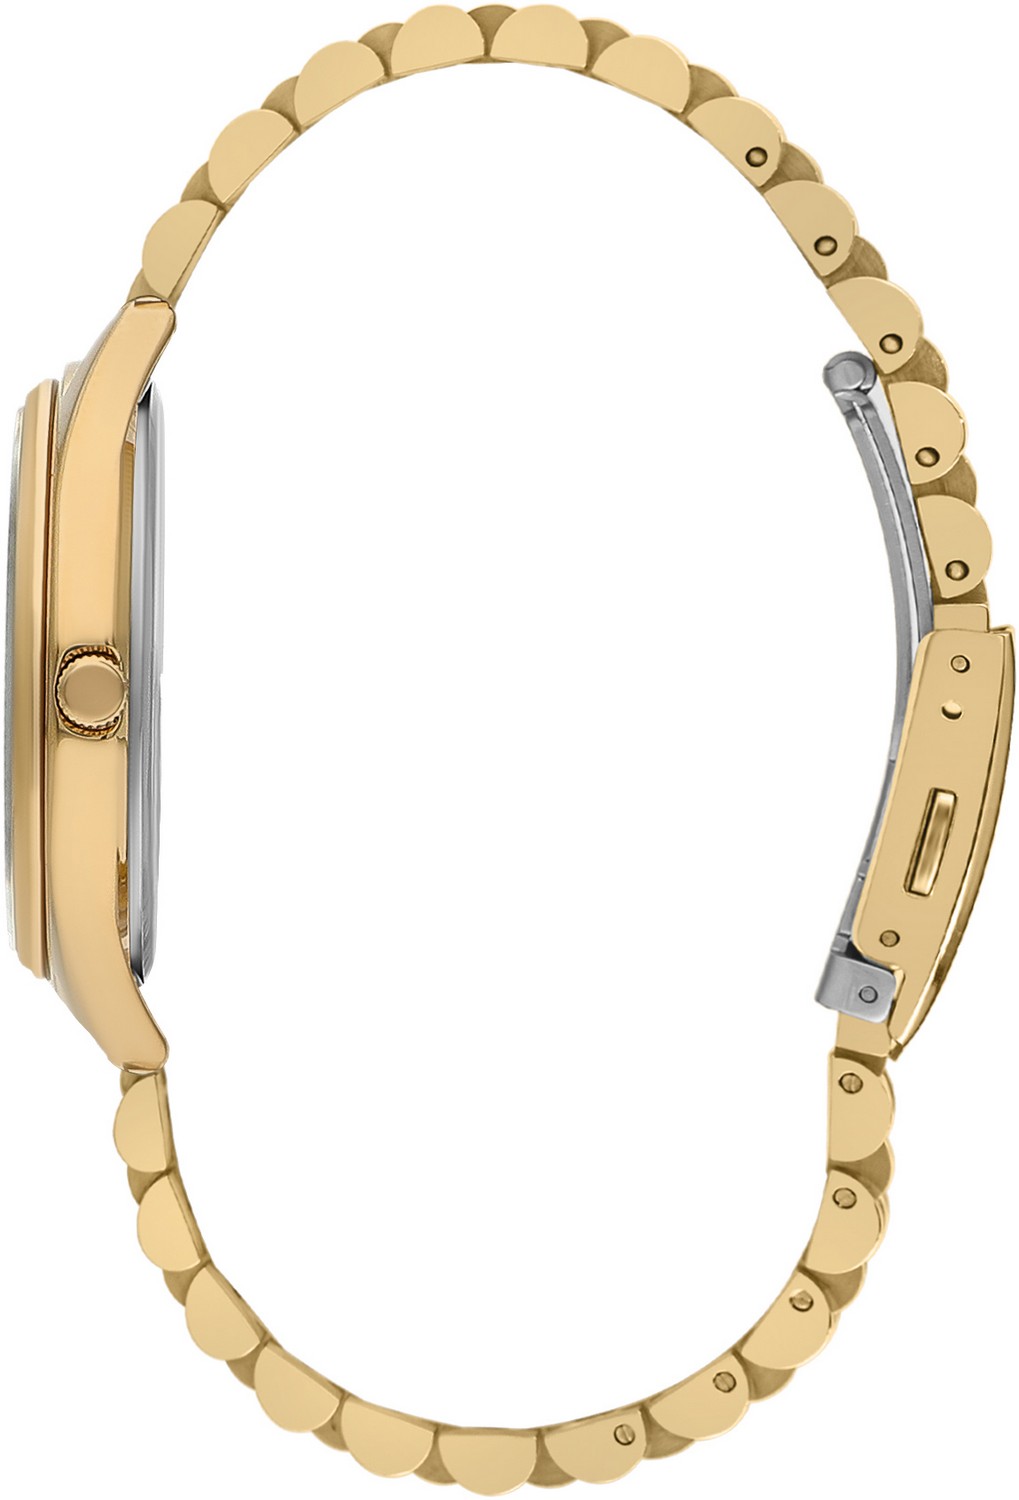 BEVERLY HILLS POLO CLUB  Женские часы, кварцевый механизм, суперметалл с покрытием, 37 мм